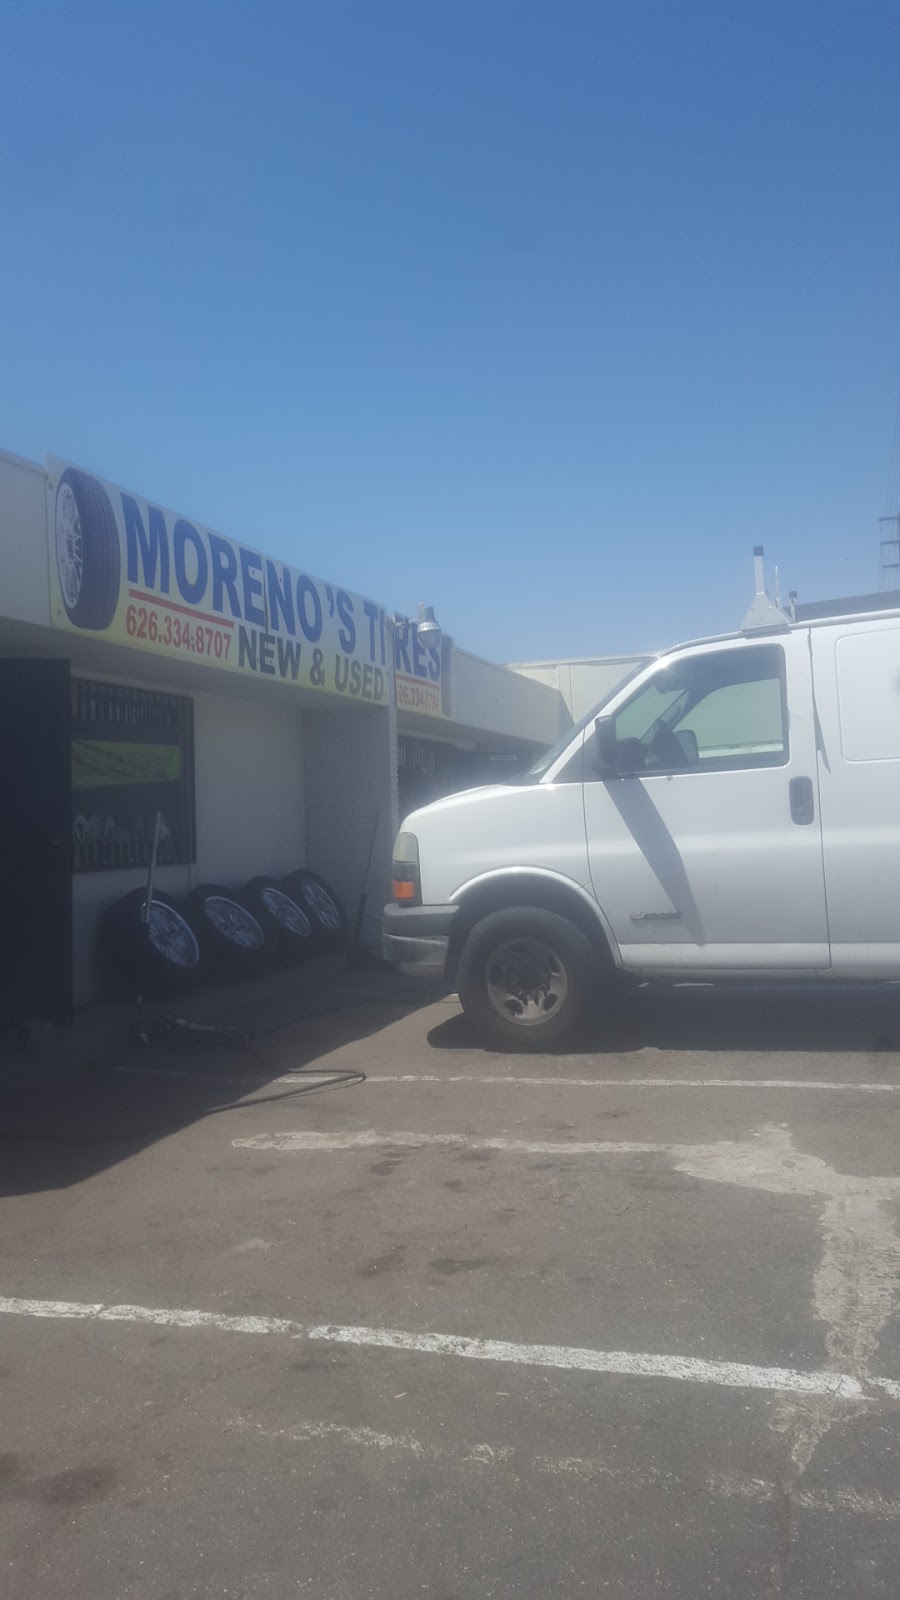 Morenos Tires | 131 S Irwindale Ave, Azusa, CA 91702, USA | Phone: (626) 334-8707